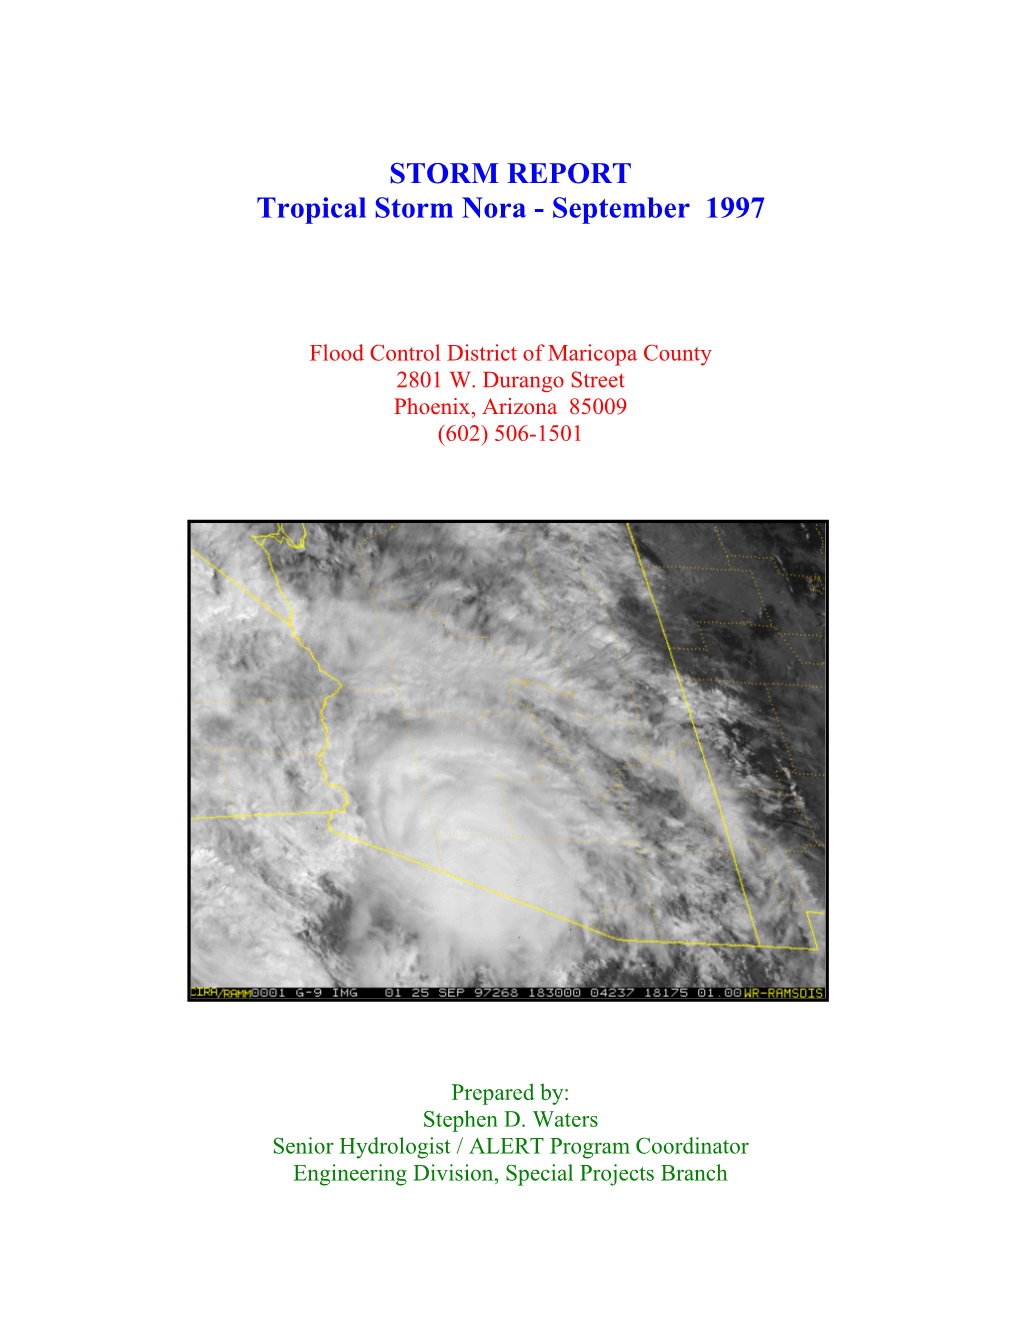 STORM REPORT Tropical Storm Nora - September 1997